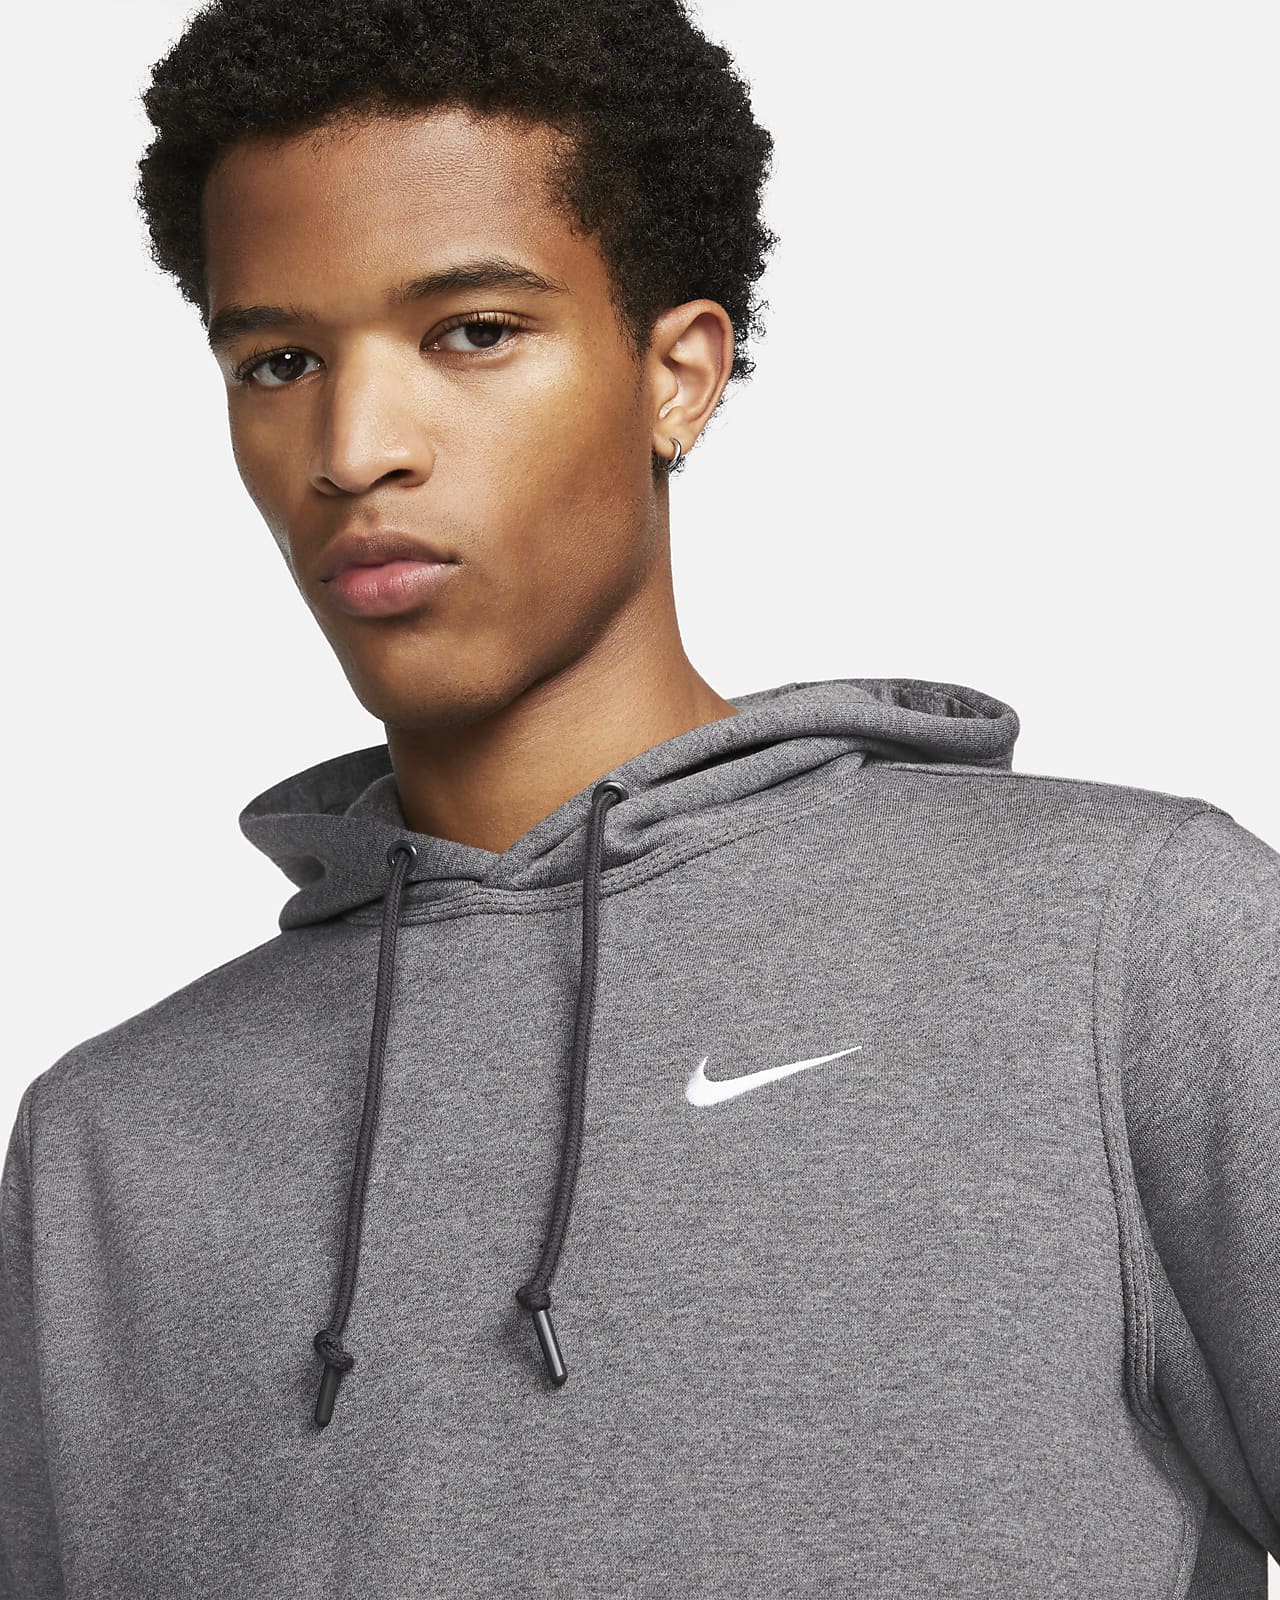 Nike Big Swoosh Jacket Cheapest Outlet, Save 52% | jlcatj.gob.mx